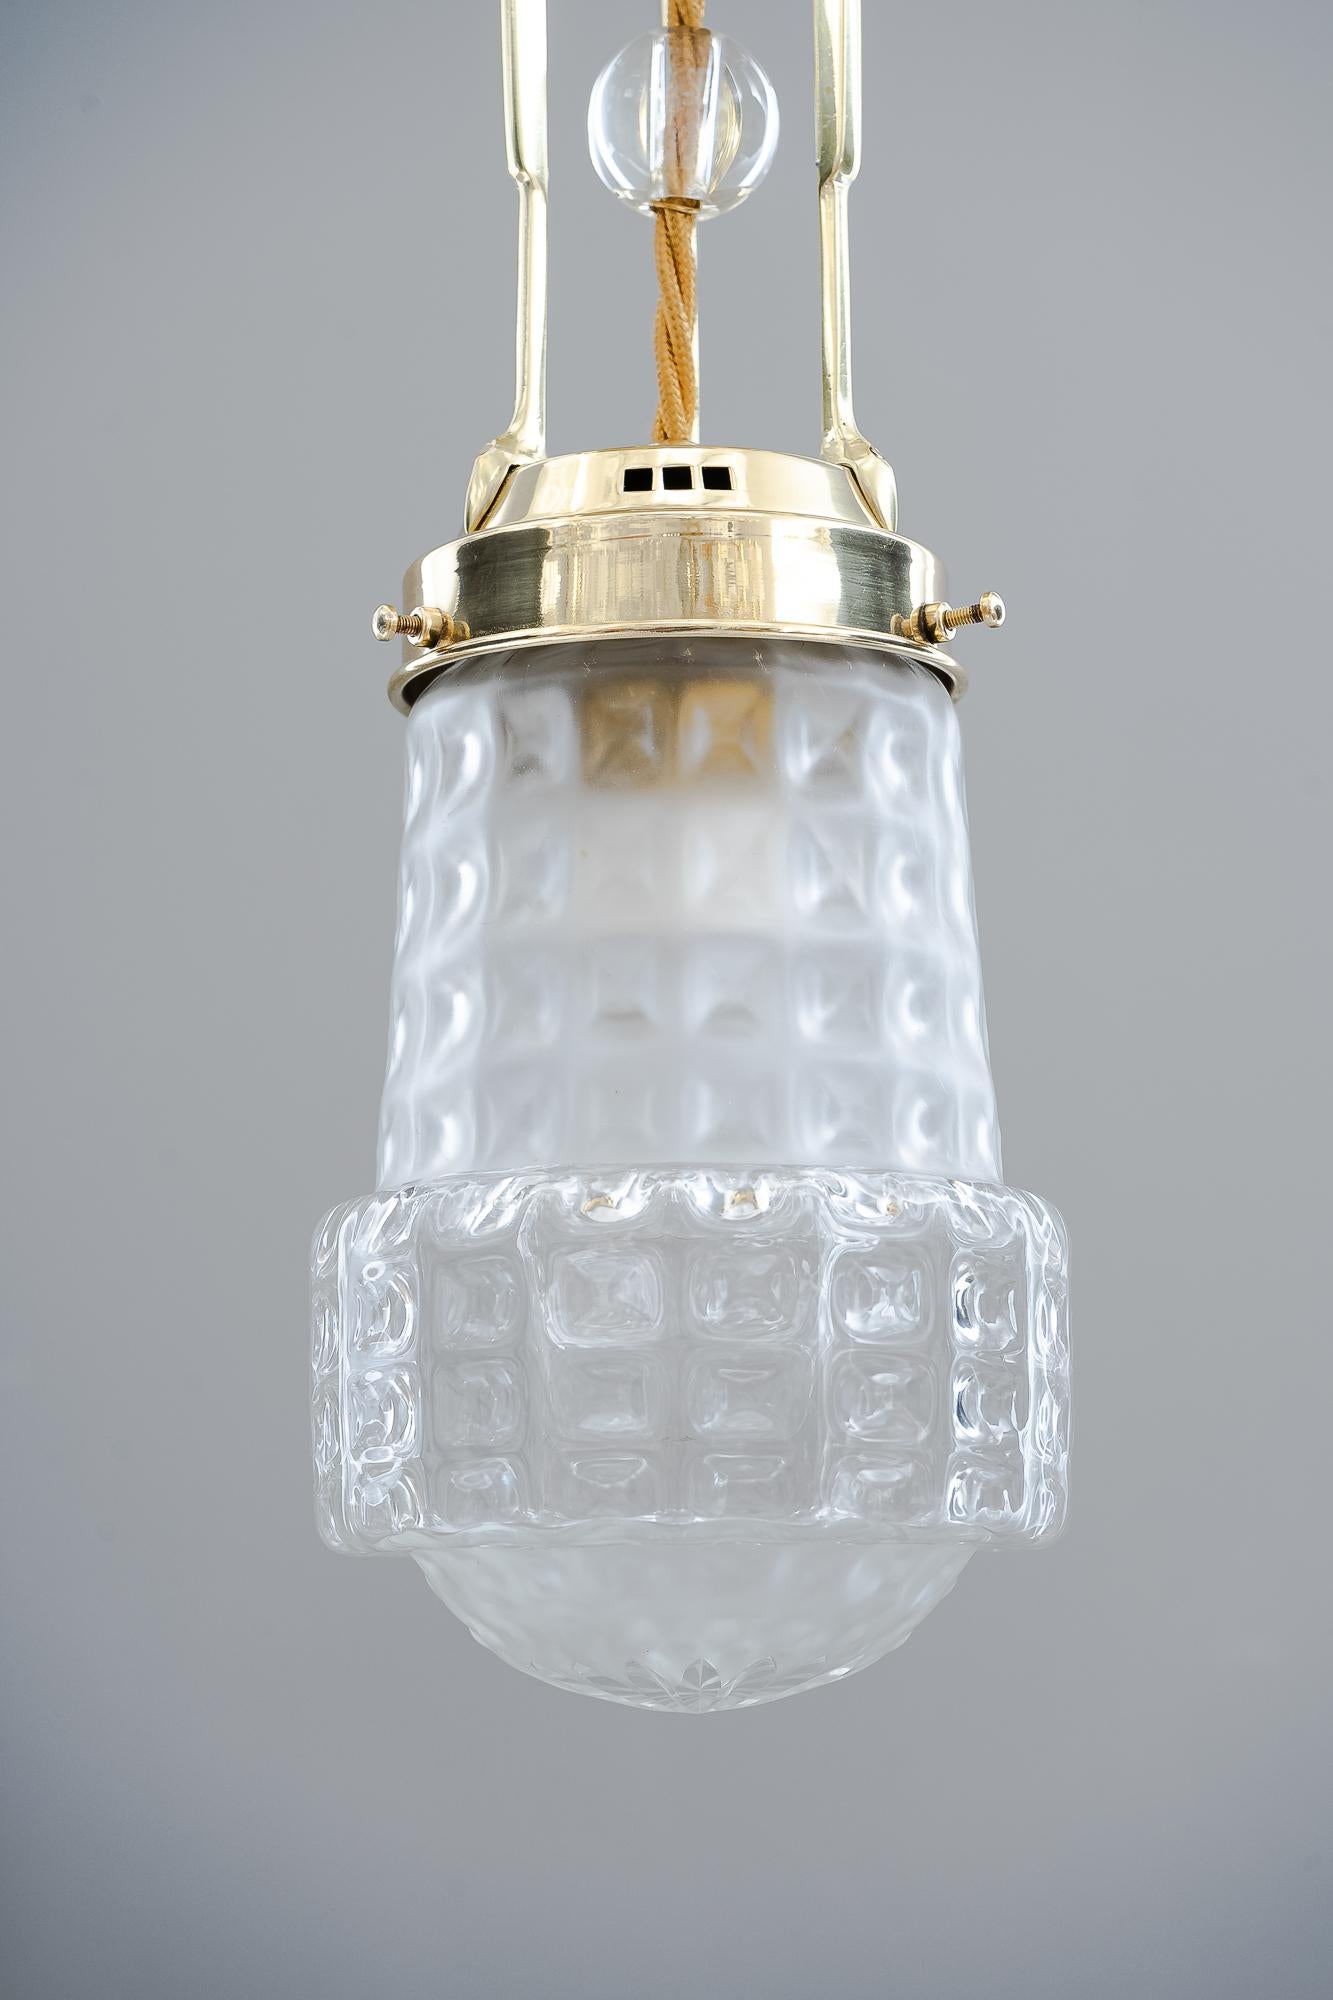 Austrian Art Deco Ceiling Lamp with Original Glass Shade, Vienna, circa 1920s